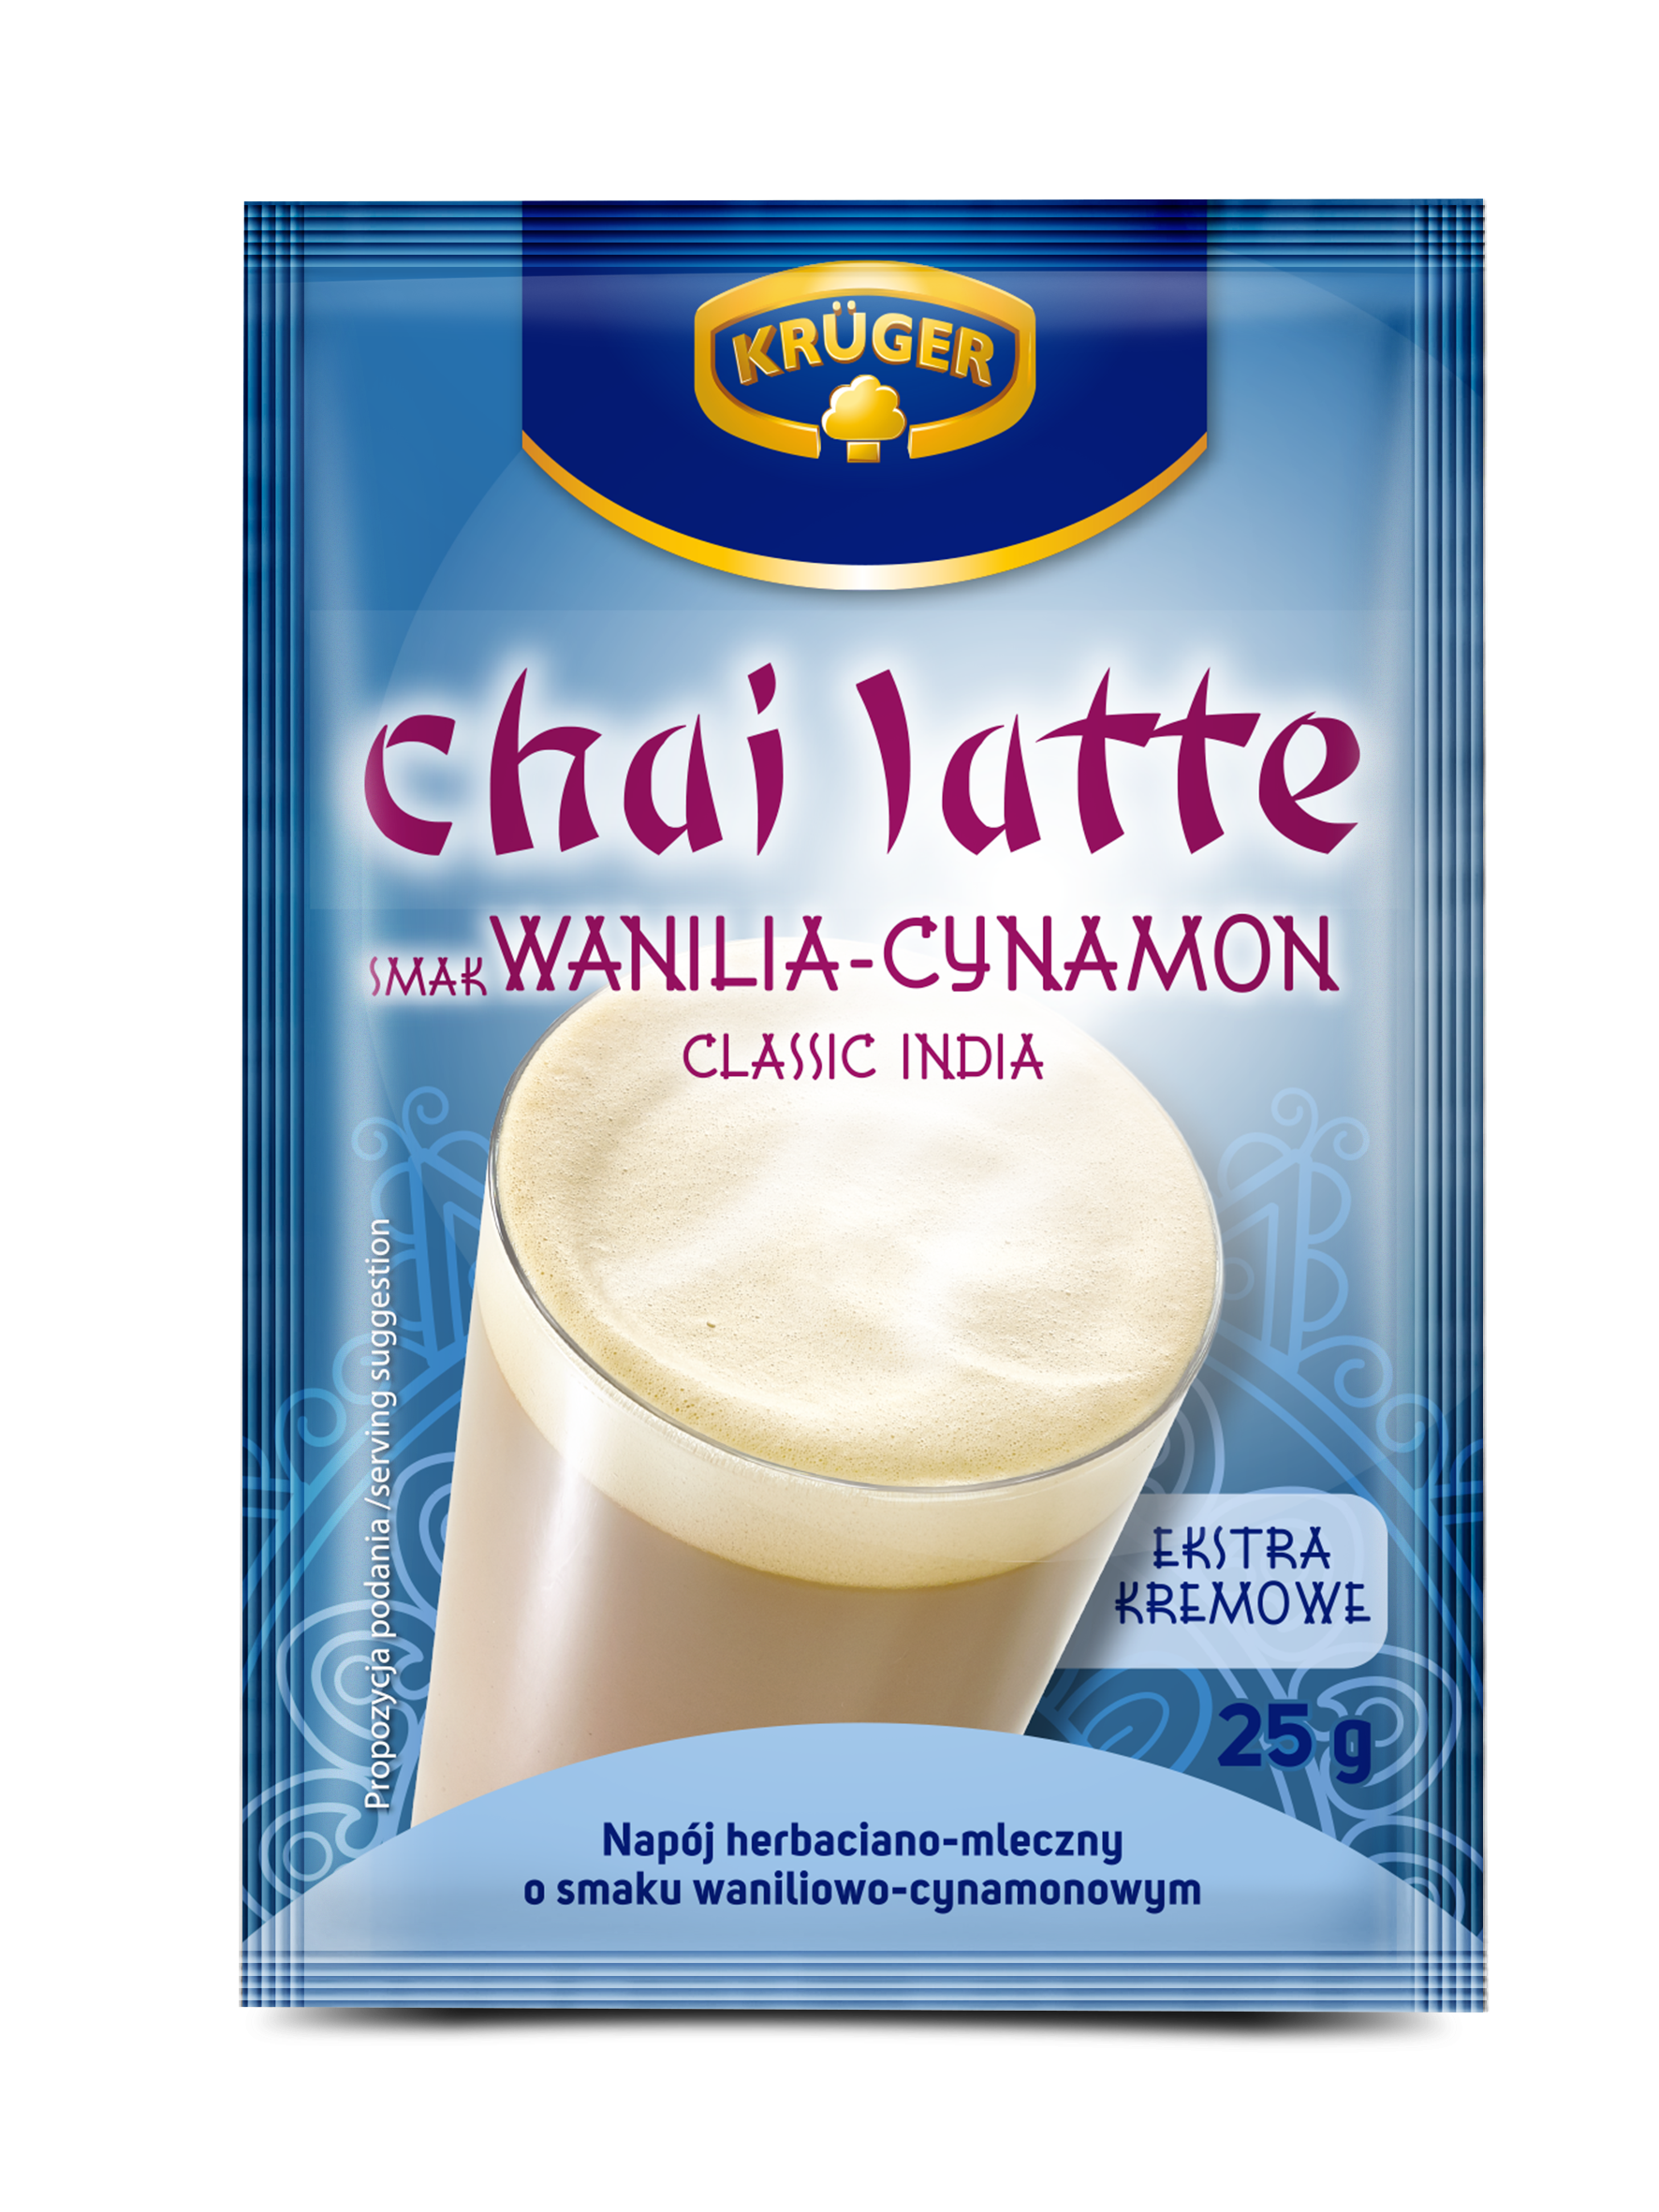 Krüger Chai Latte vanilla-cinnamon flavor